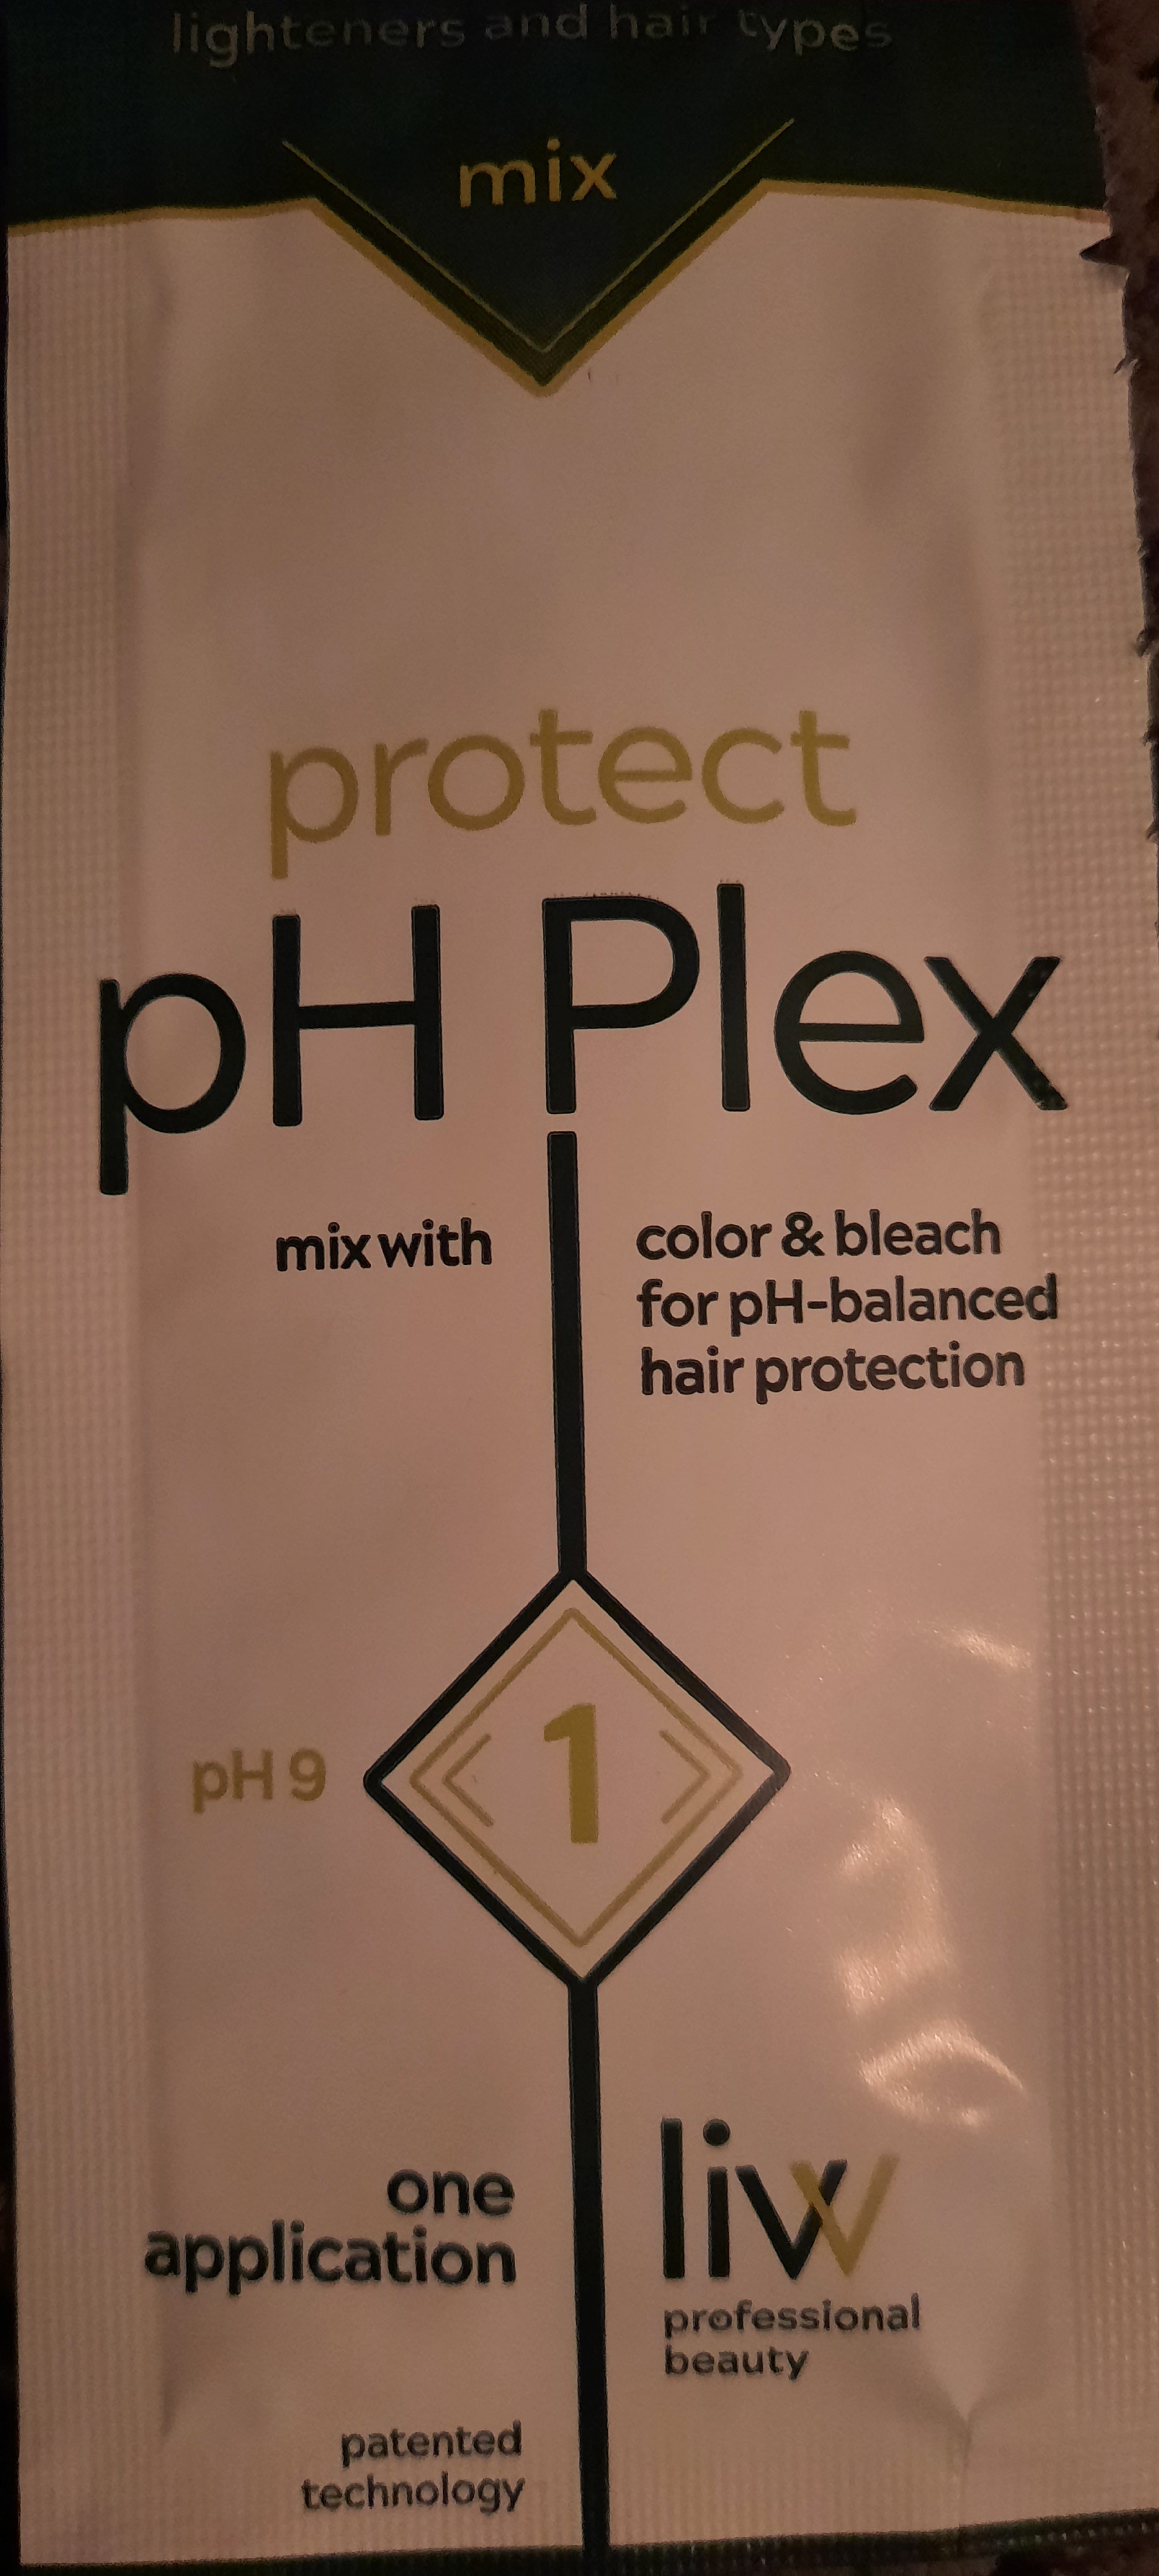 Ph plex No.1